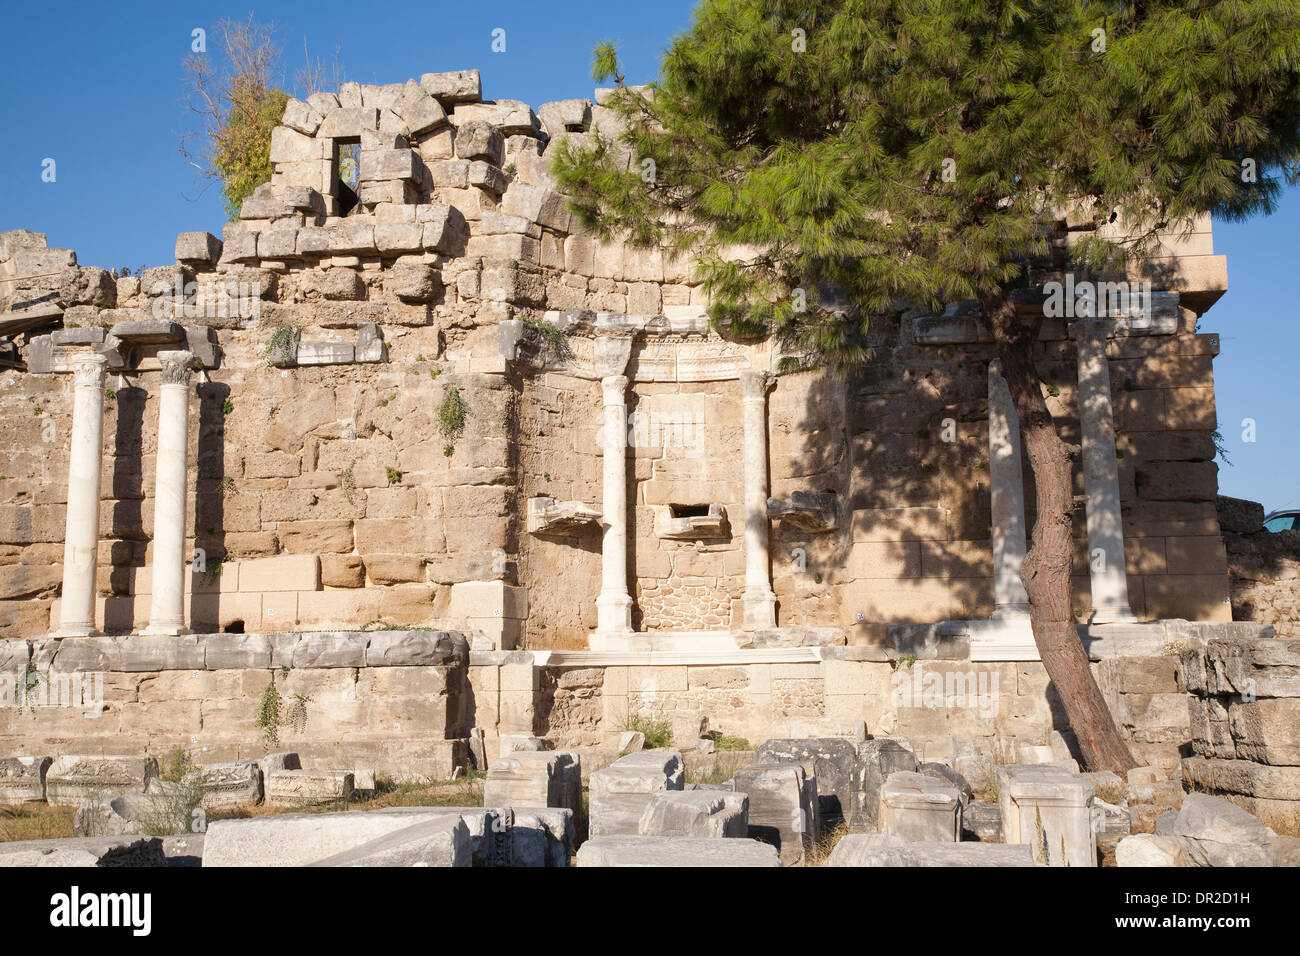 Fontana monumentale area archeologica, laterale costa mediterranea, Turchia, Asia Foto Stock